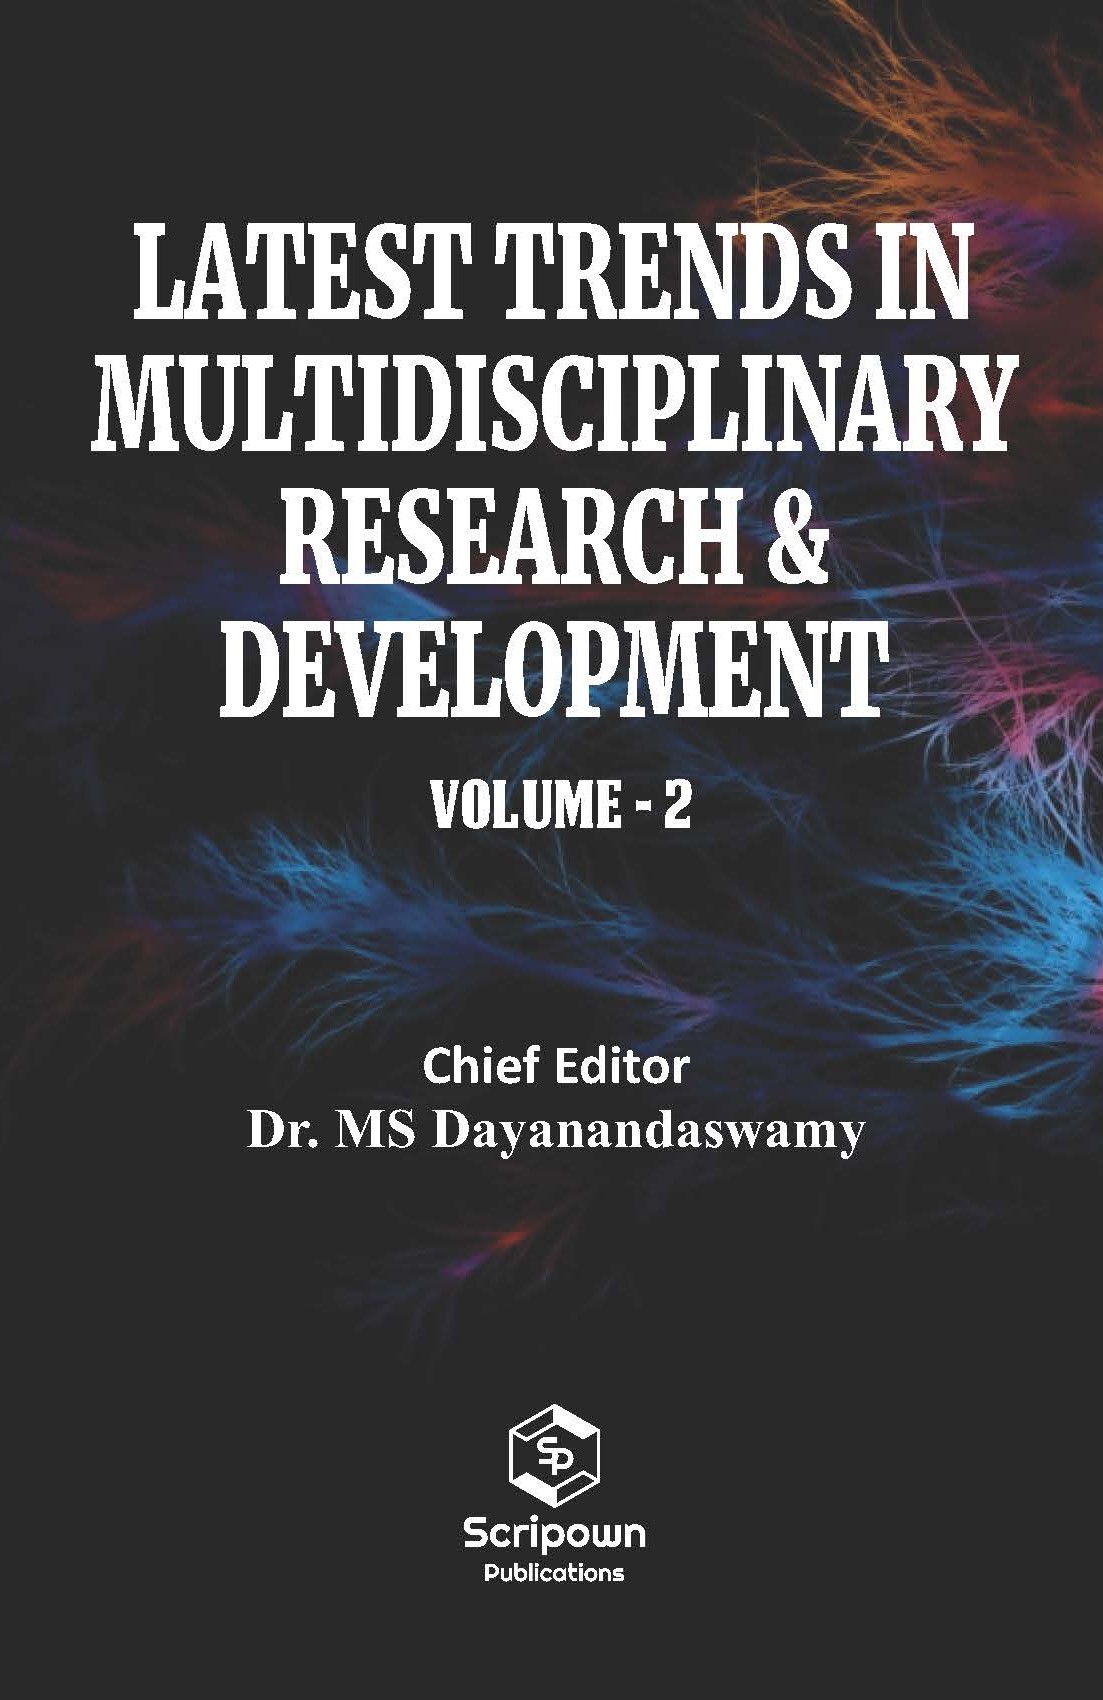 Latest Trends in Multidisciplinary Research & Development (Volume - 2)